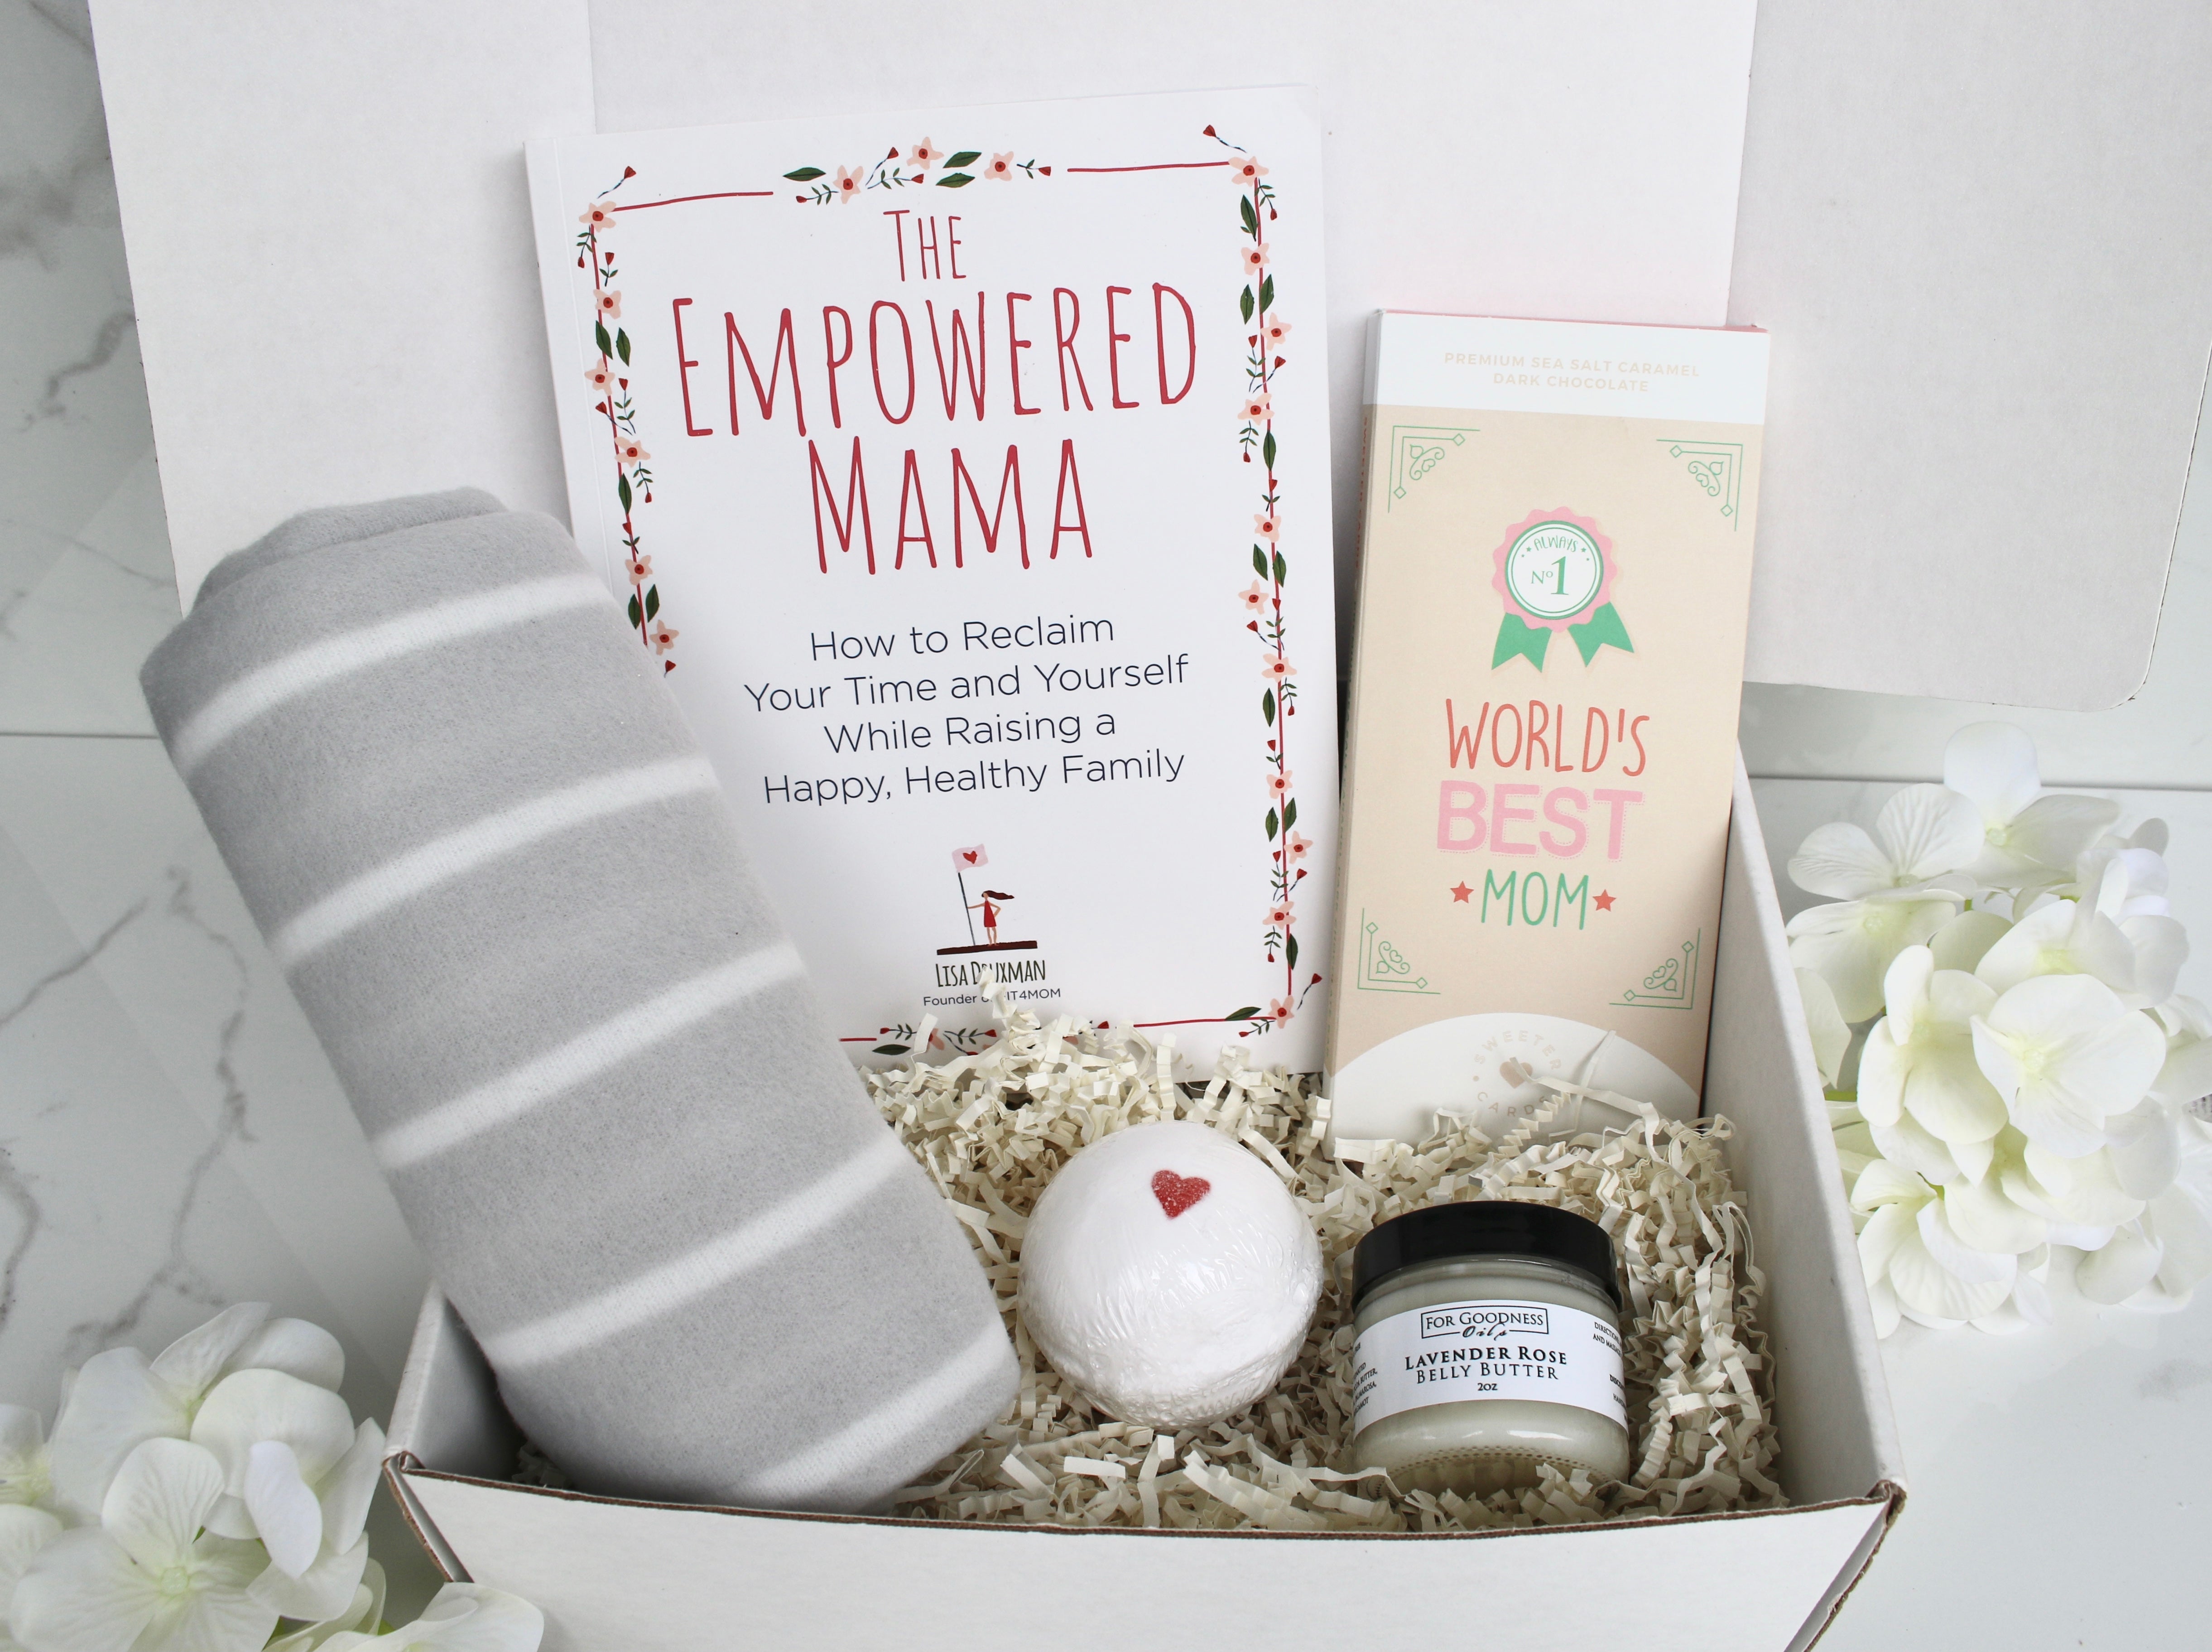 New Mom Box – Serenity Now, INC